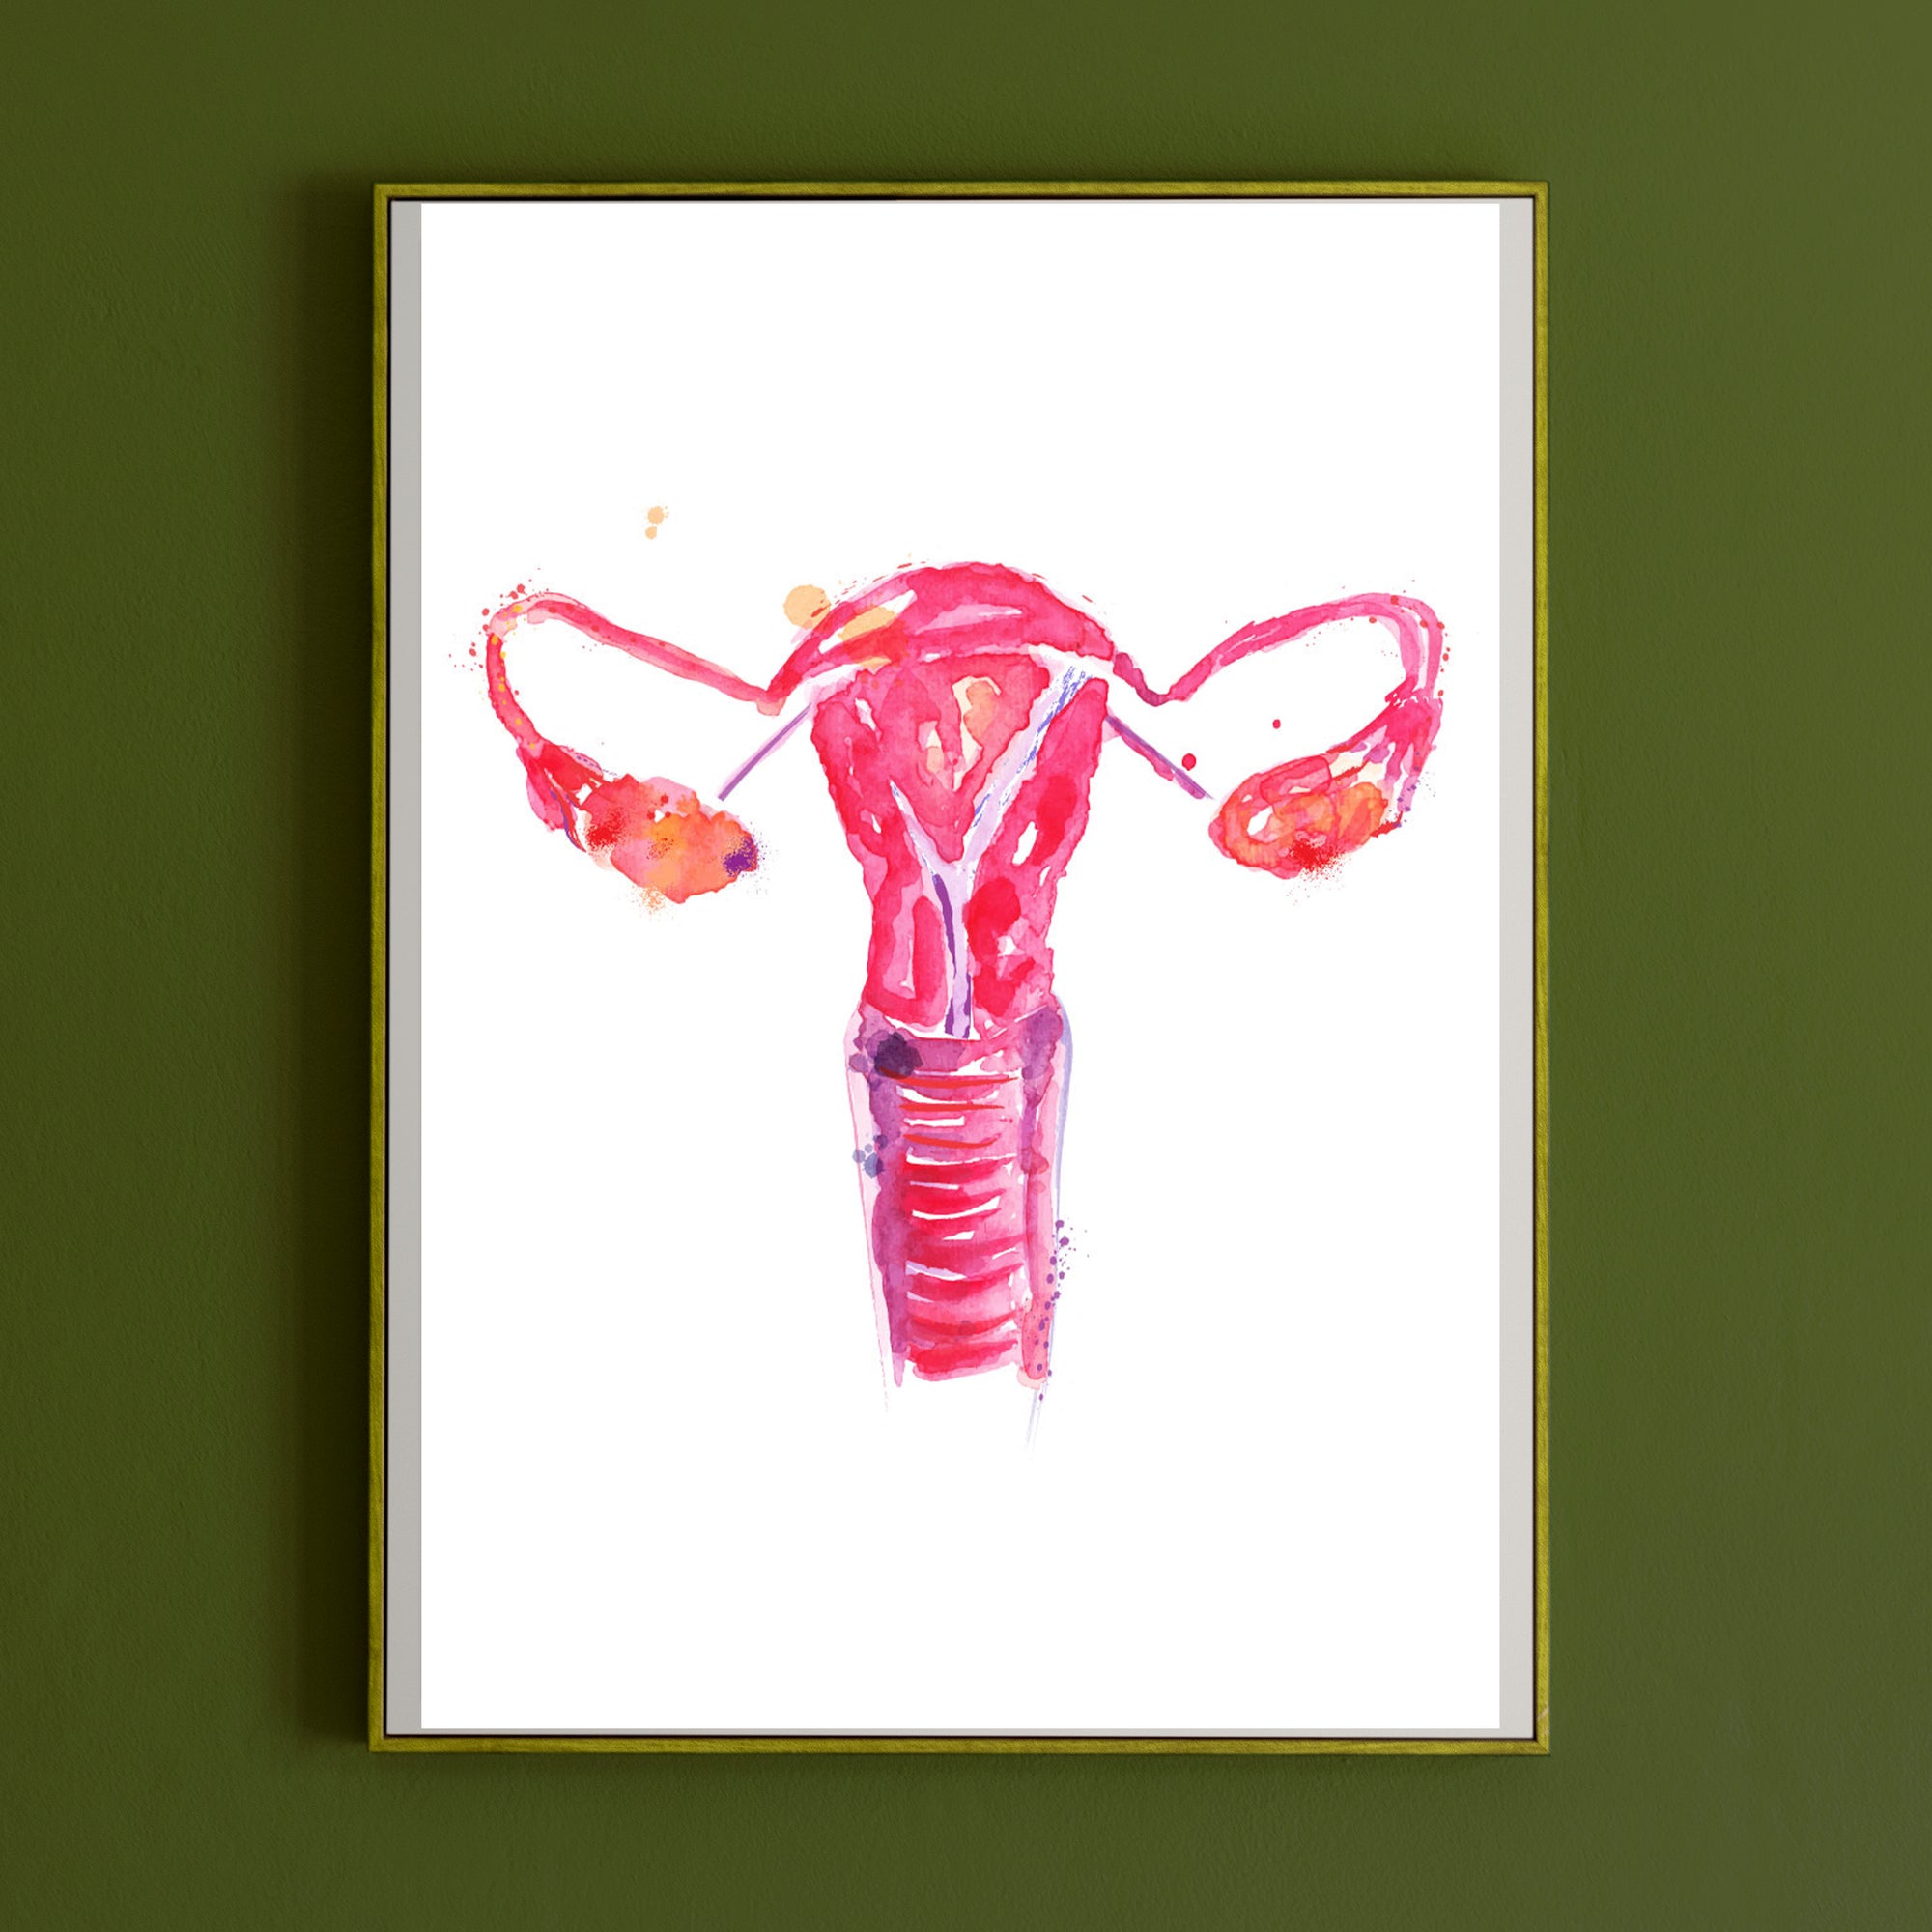 Uterus Anatomy Art Print, OBGYN Office Artwork, Gynecology Midwife Gift